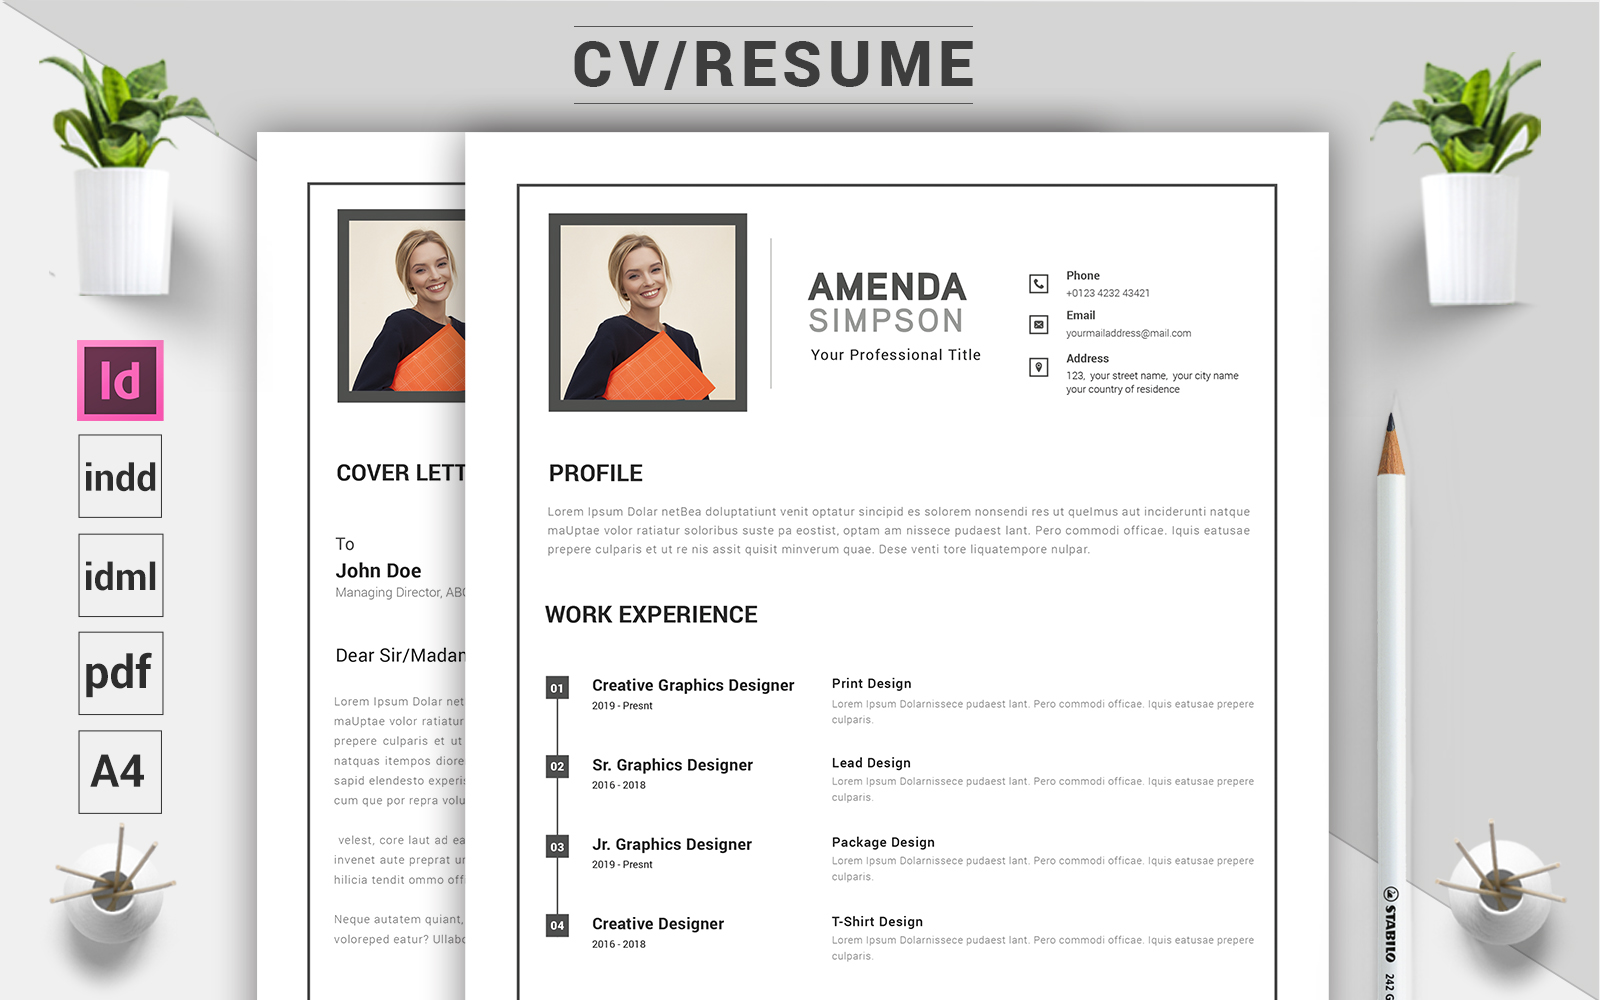 Amenda Simpson - CV & Resume Template